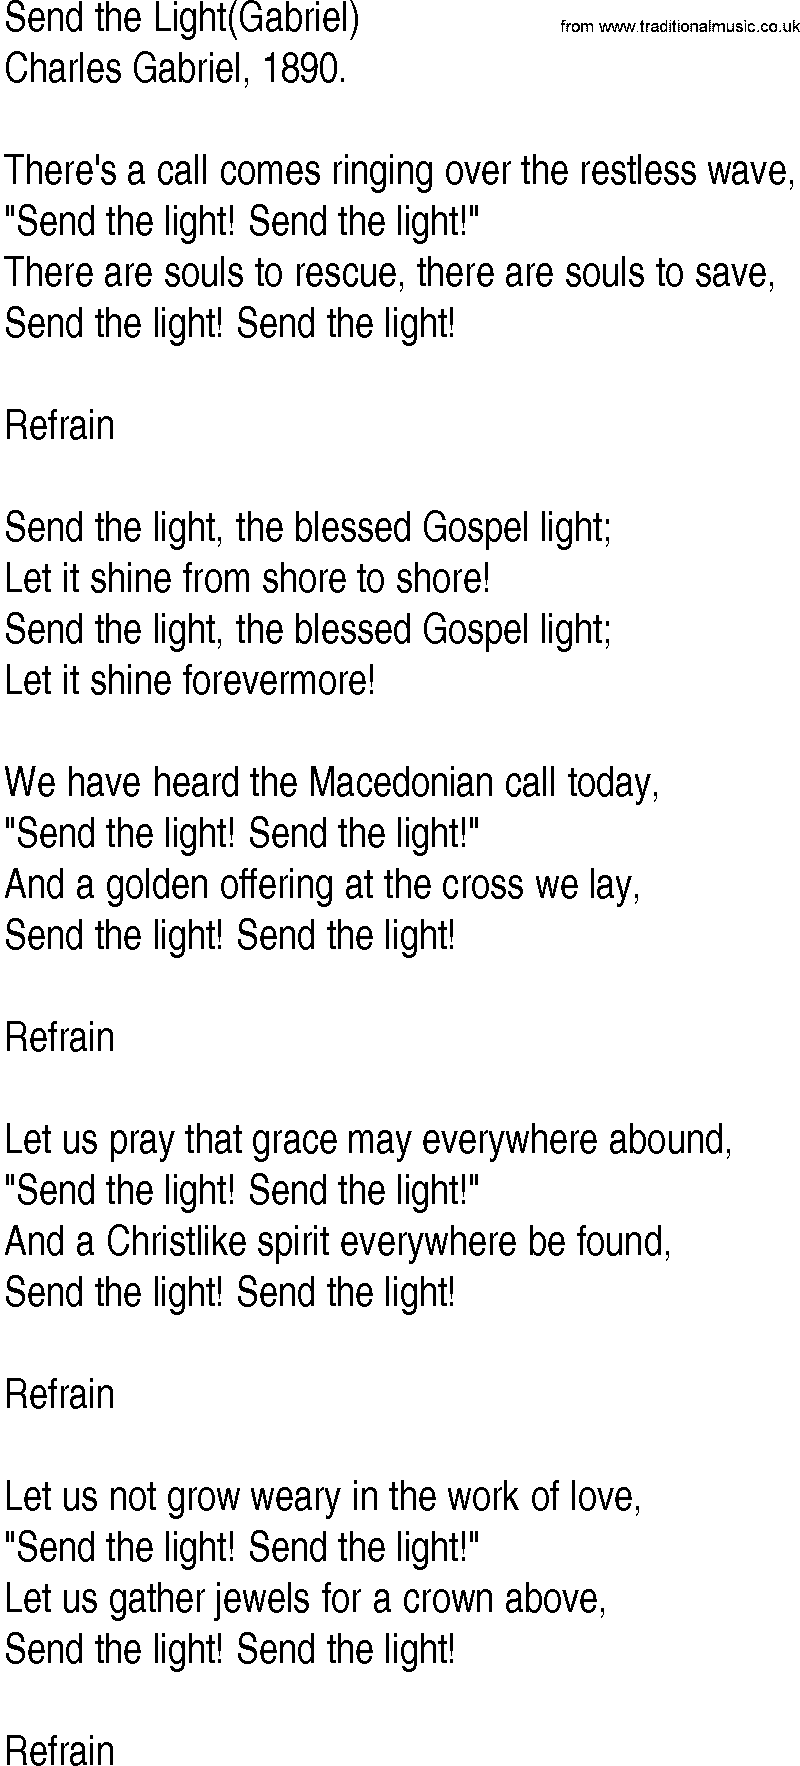 Hymn and Gospel Song: Send the Light(Gabriel) by Charles Gabriel lyrics